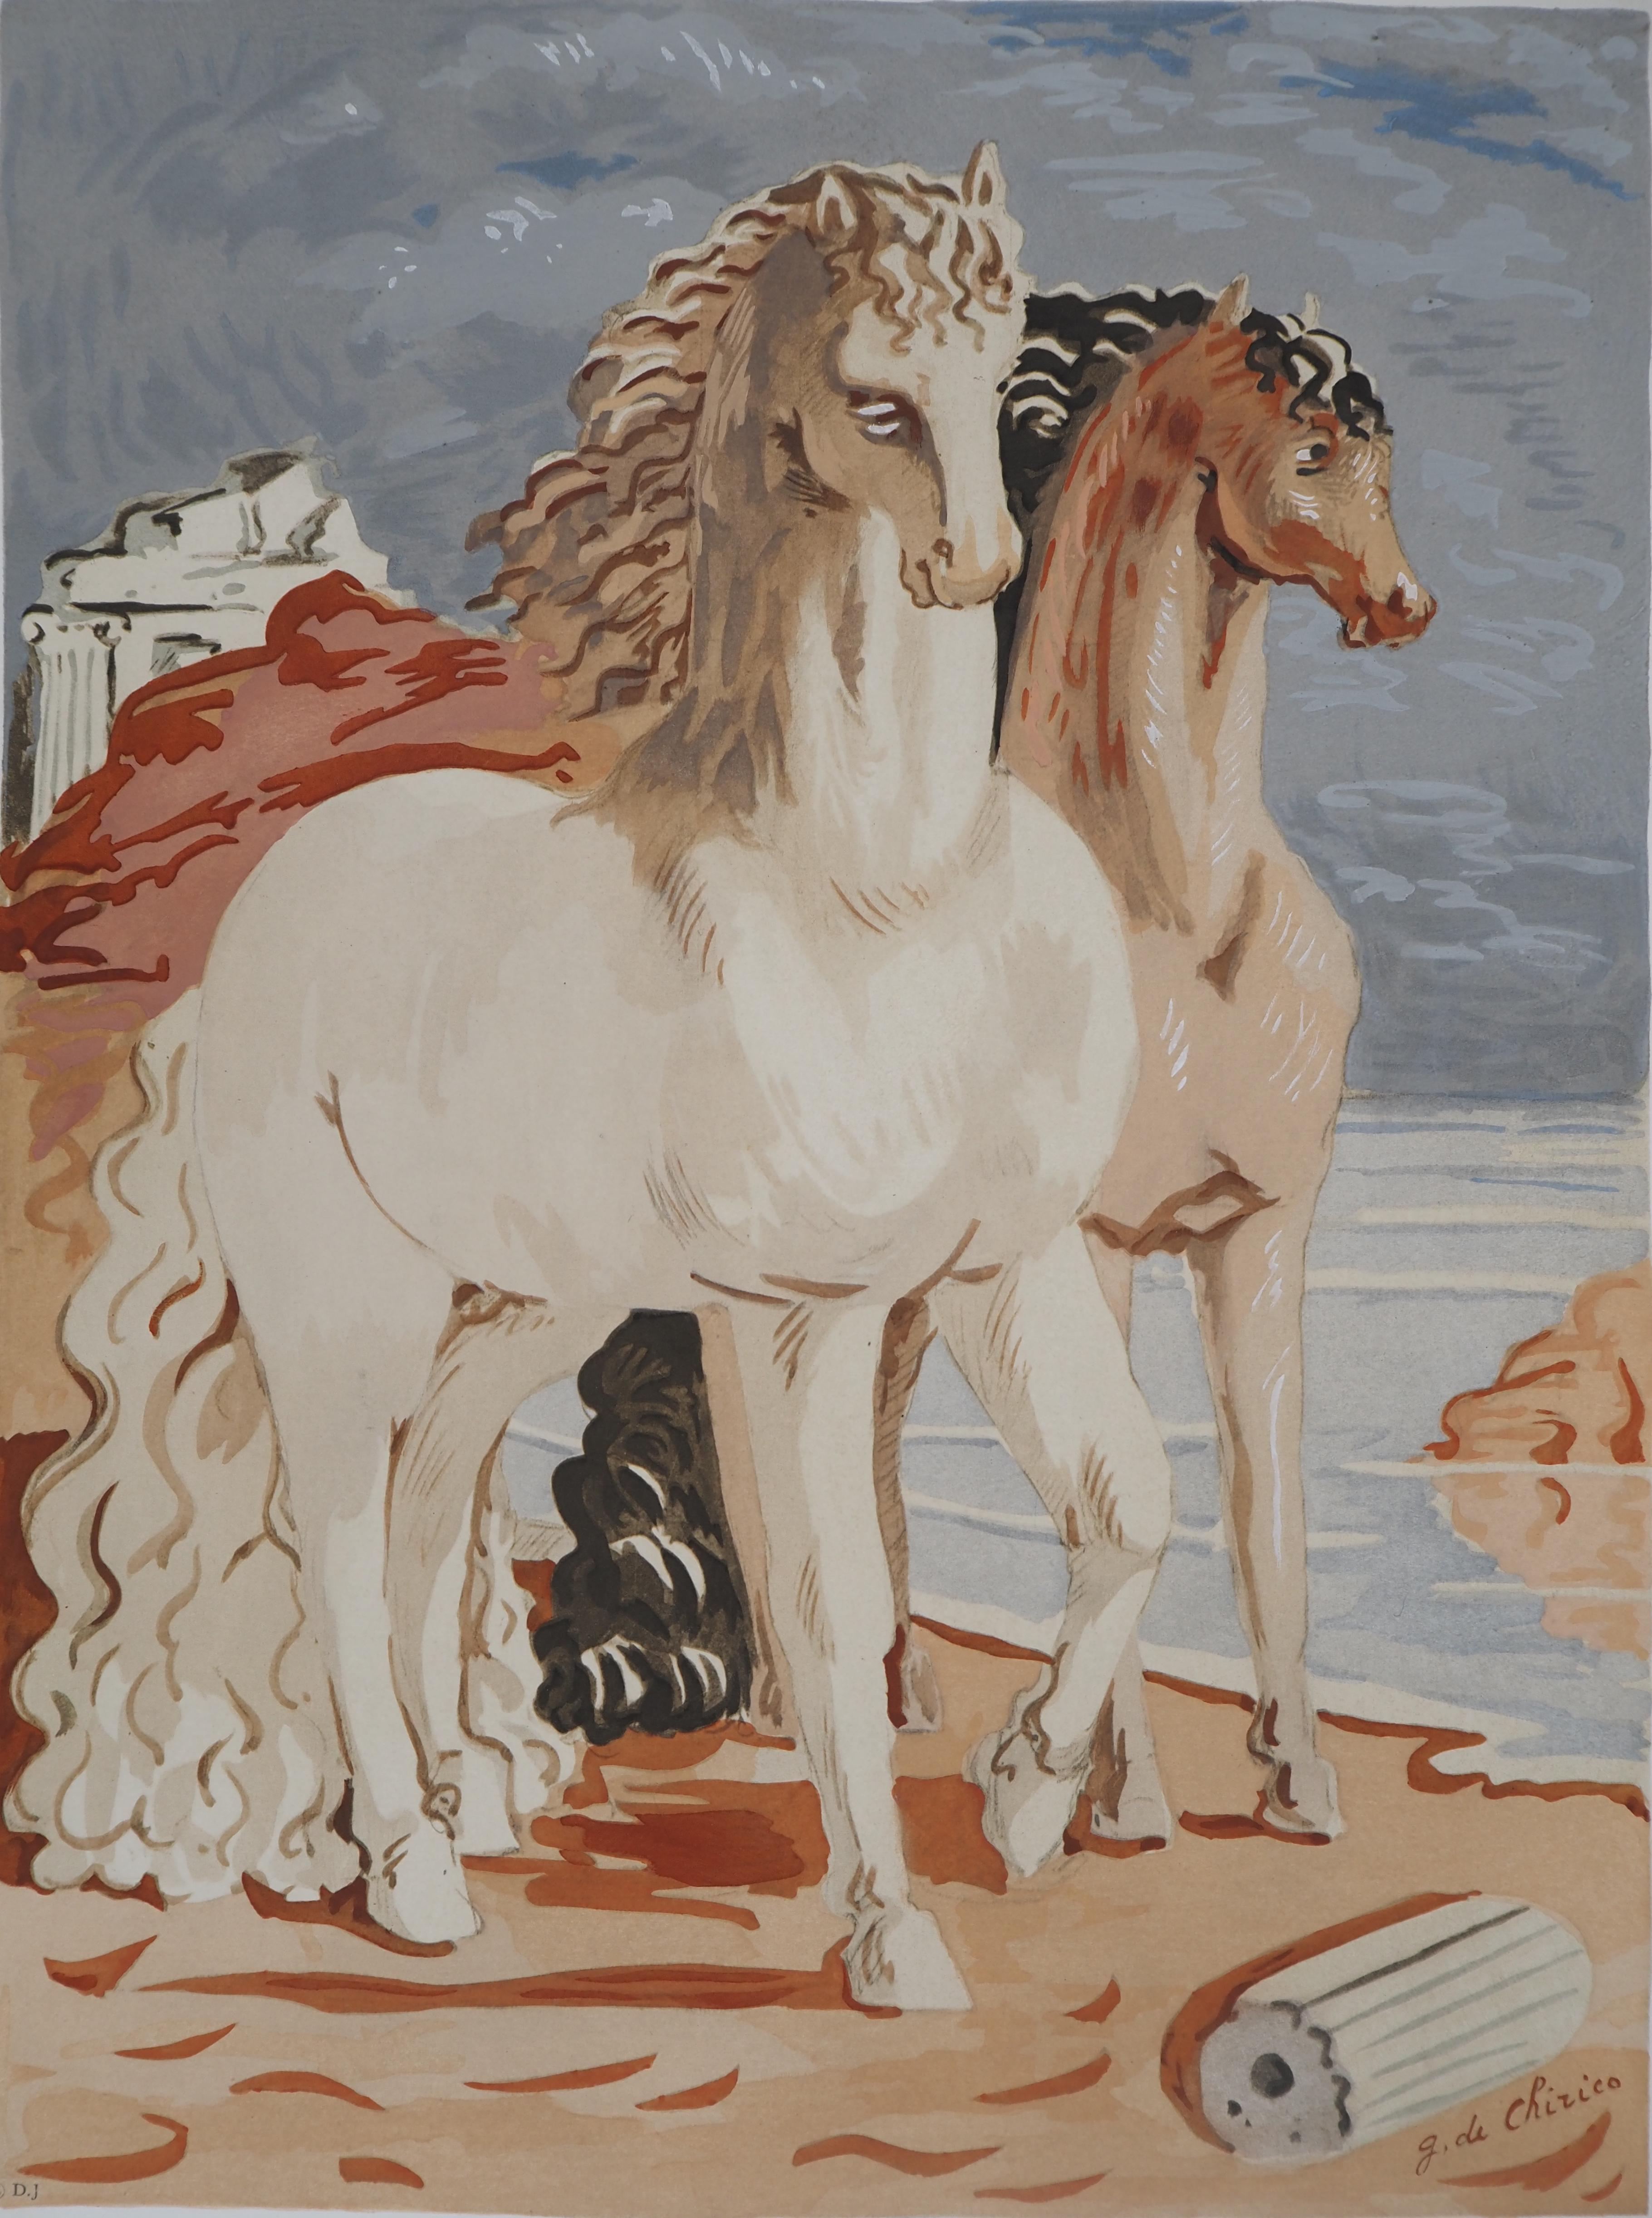 Horses in a Mythological Landscape - Lithograph - Surrealist Print by Giorgio De Chirico